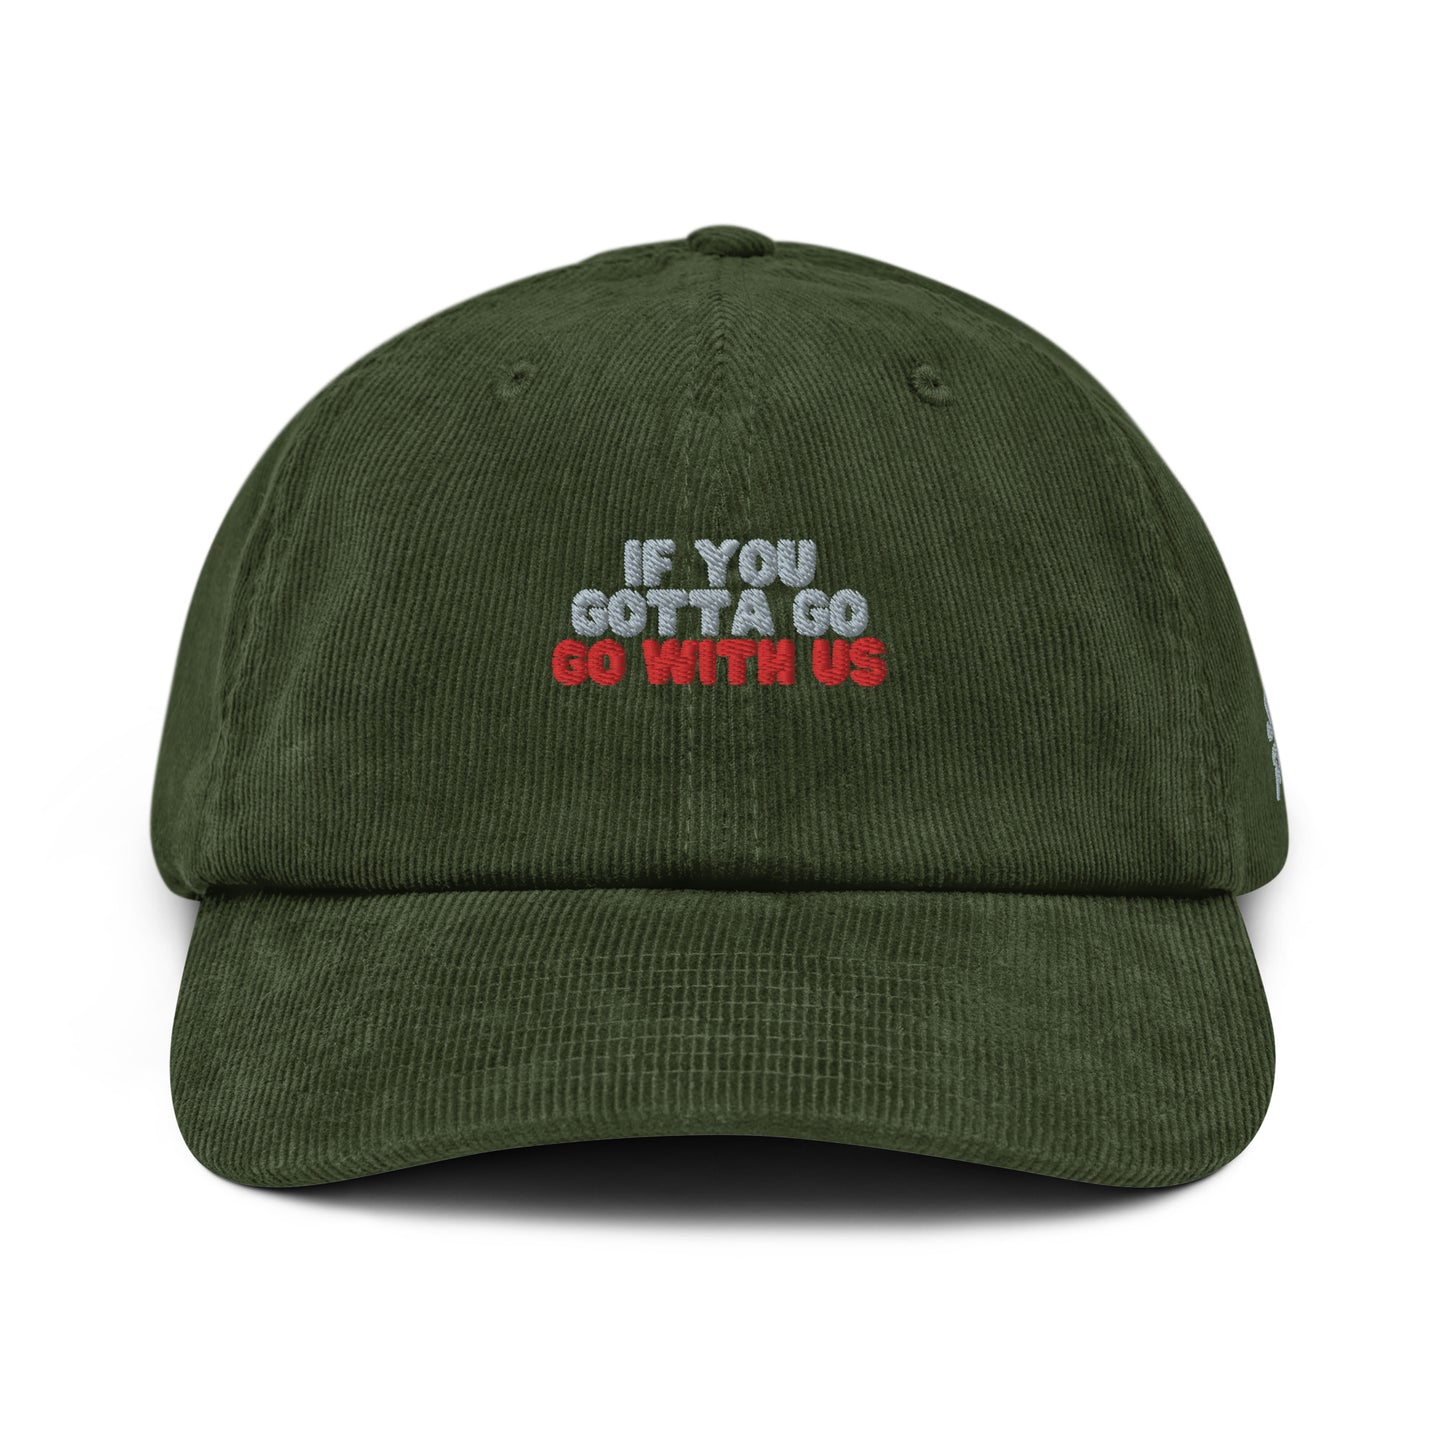 “If you gotta go, go with us” Corduroy hat